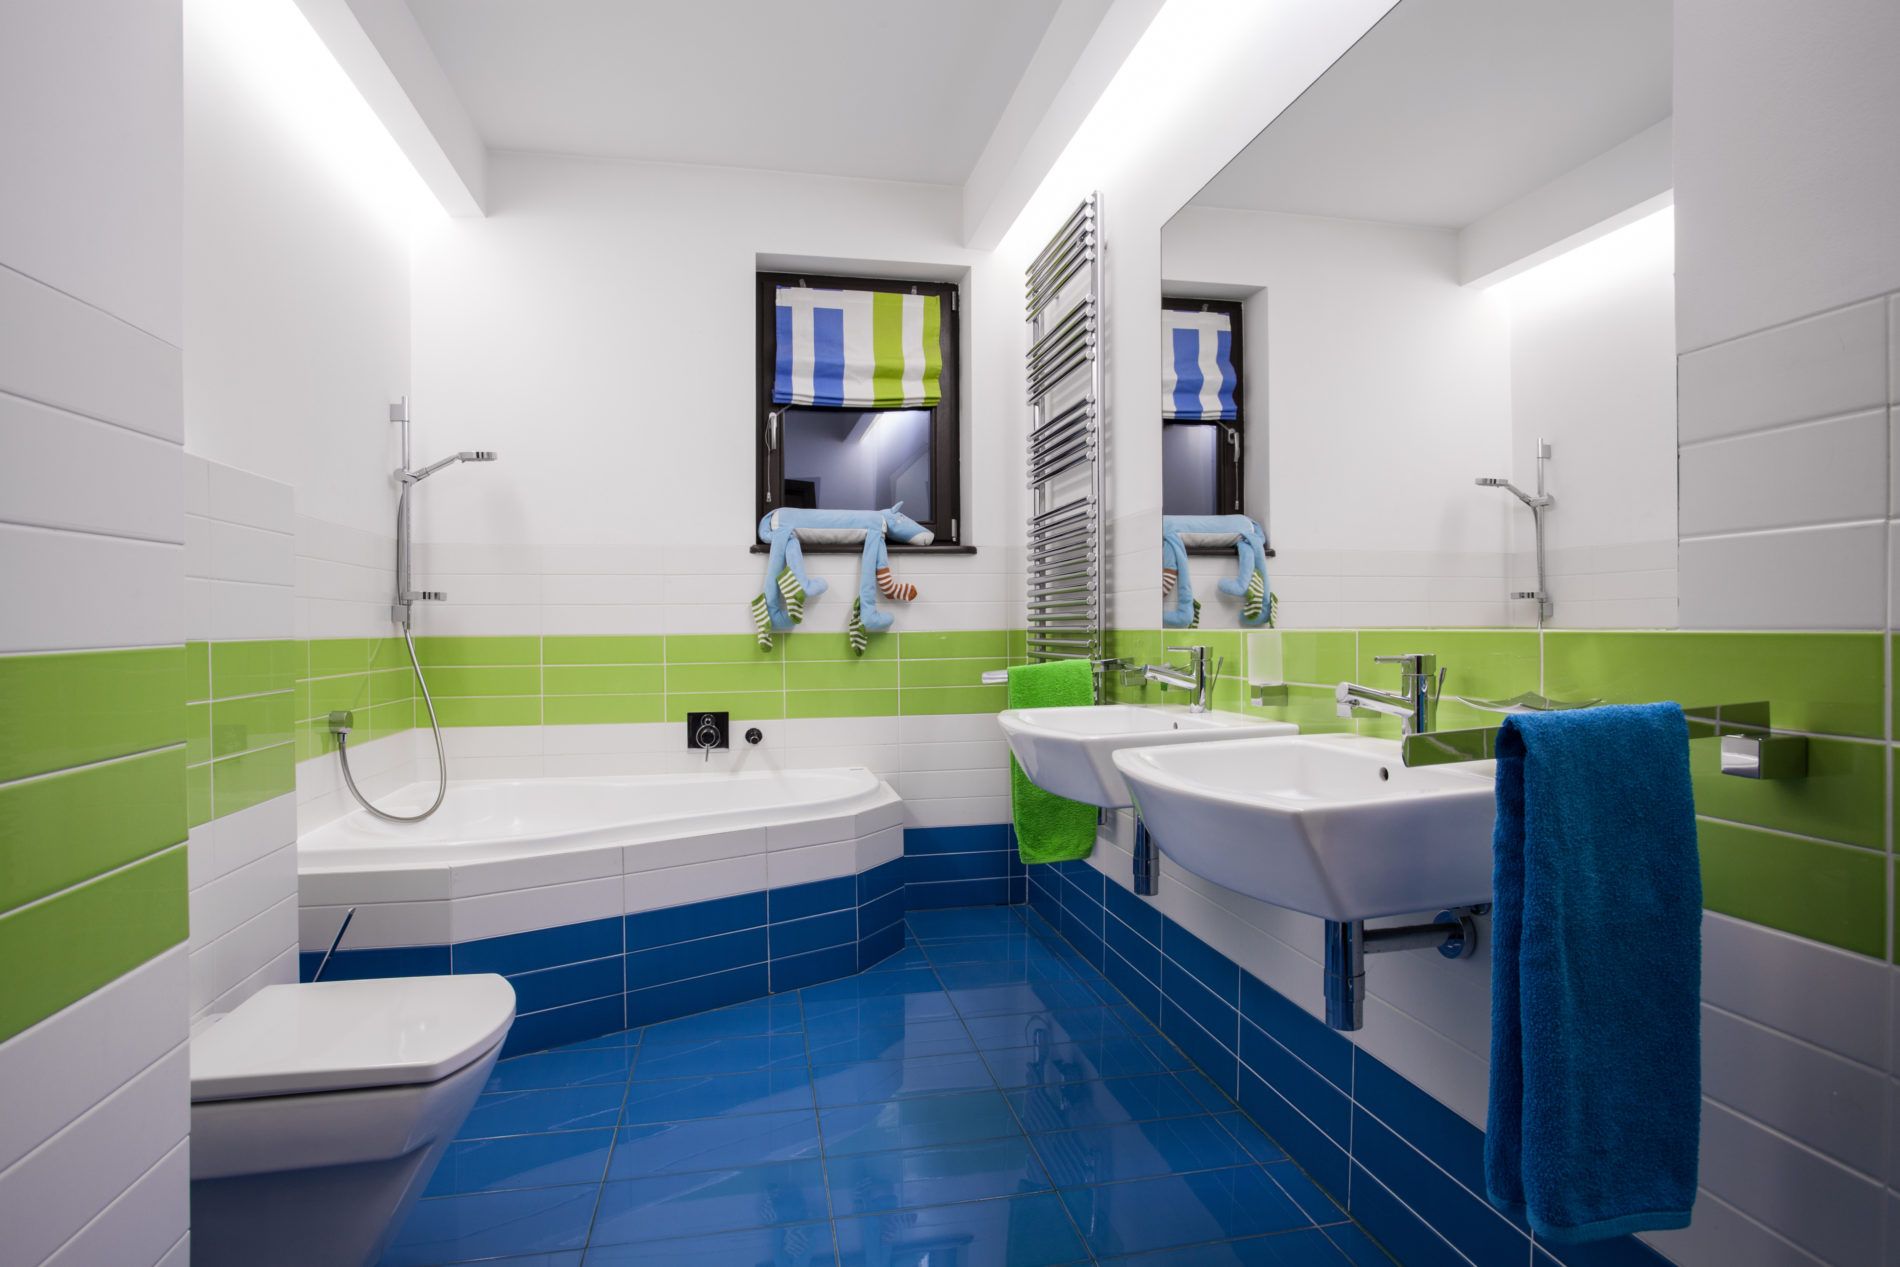 Horizontal view of modern colorful bathroom interior